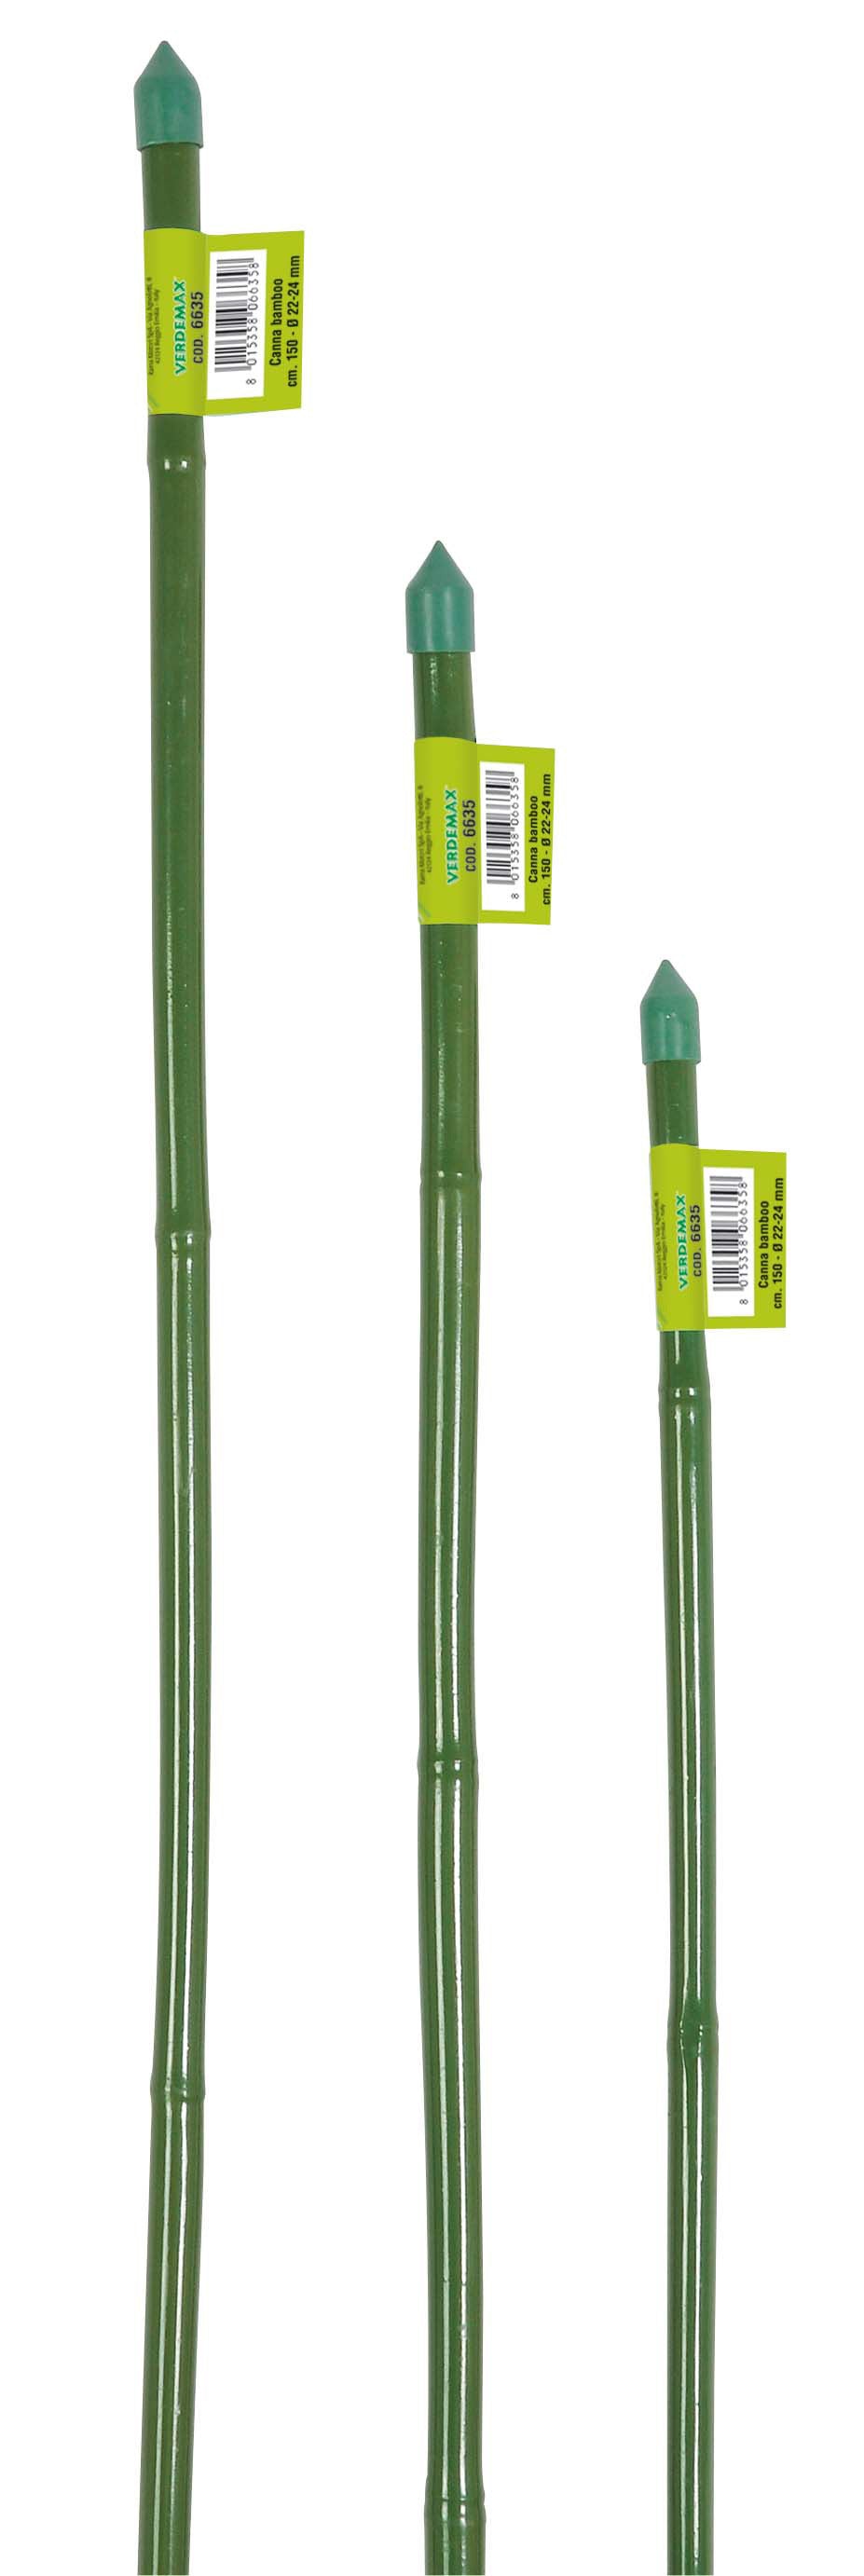 Tutore in bamboo plastificato cm. 210 d. 16-18